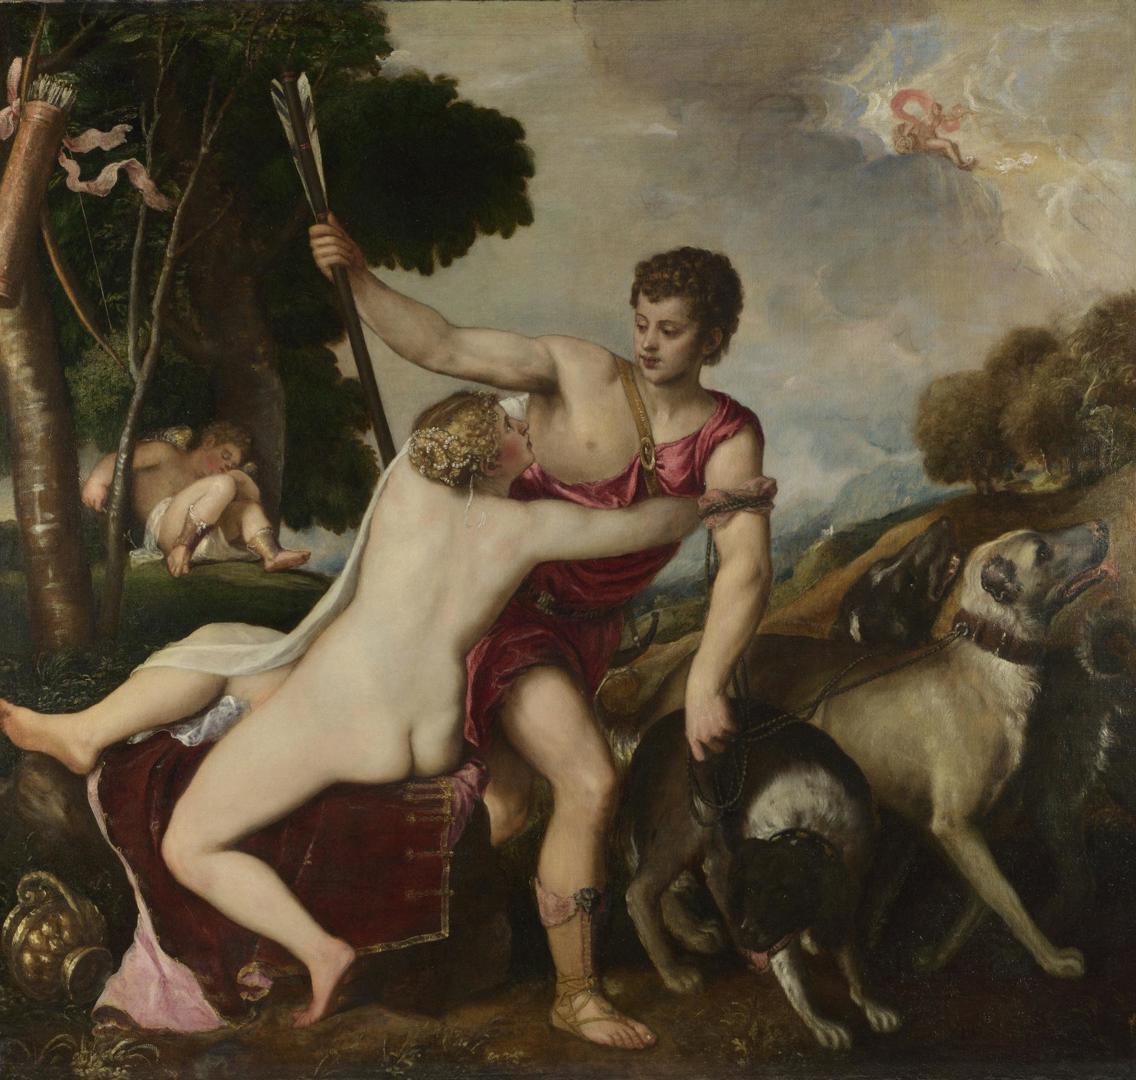 Venus and Adonis by Workshop of Titian